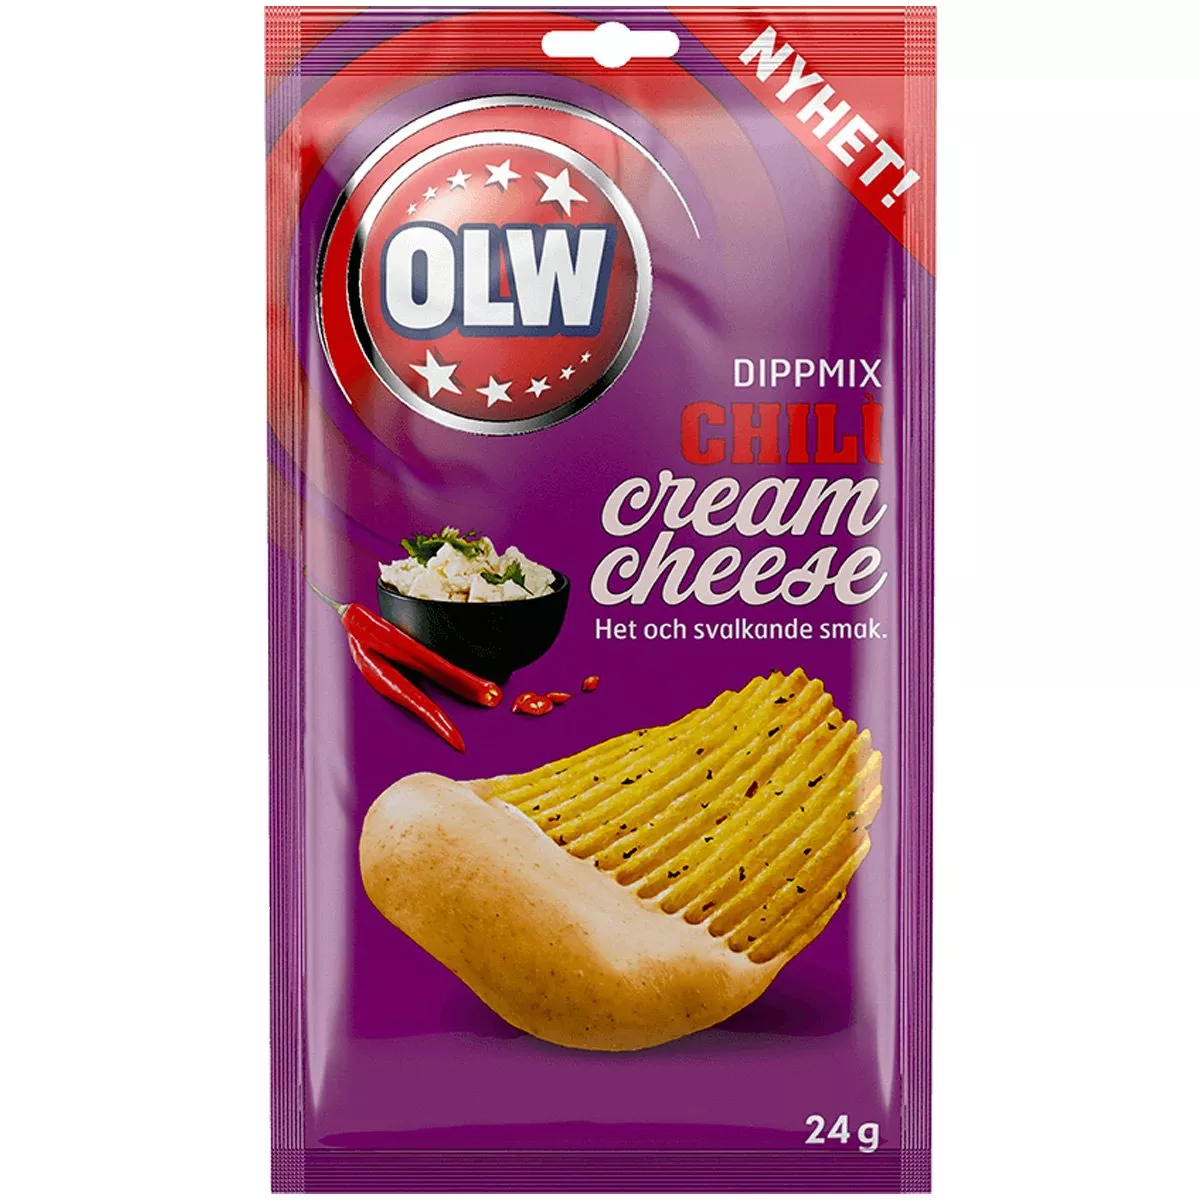 OLW Dipmix Chili Cream Cheese (24g) 1